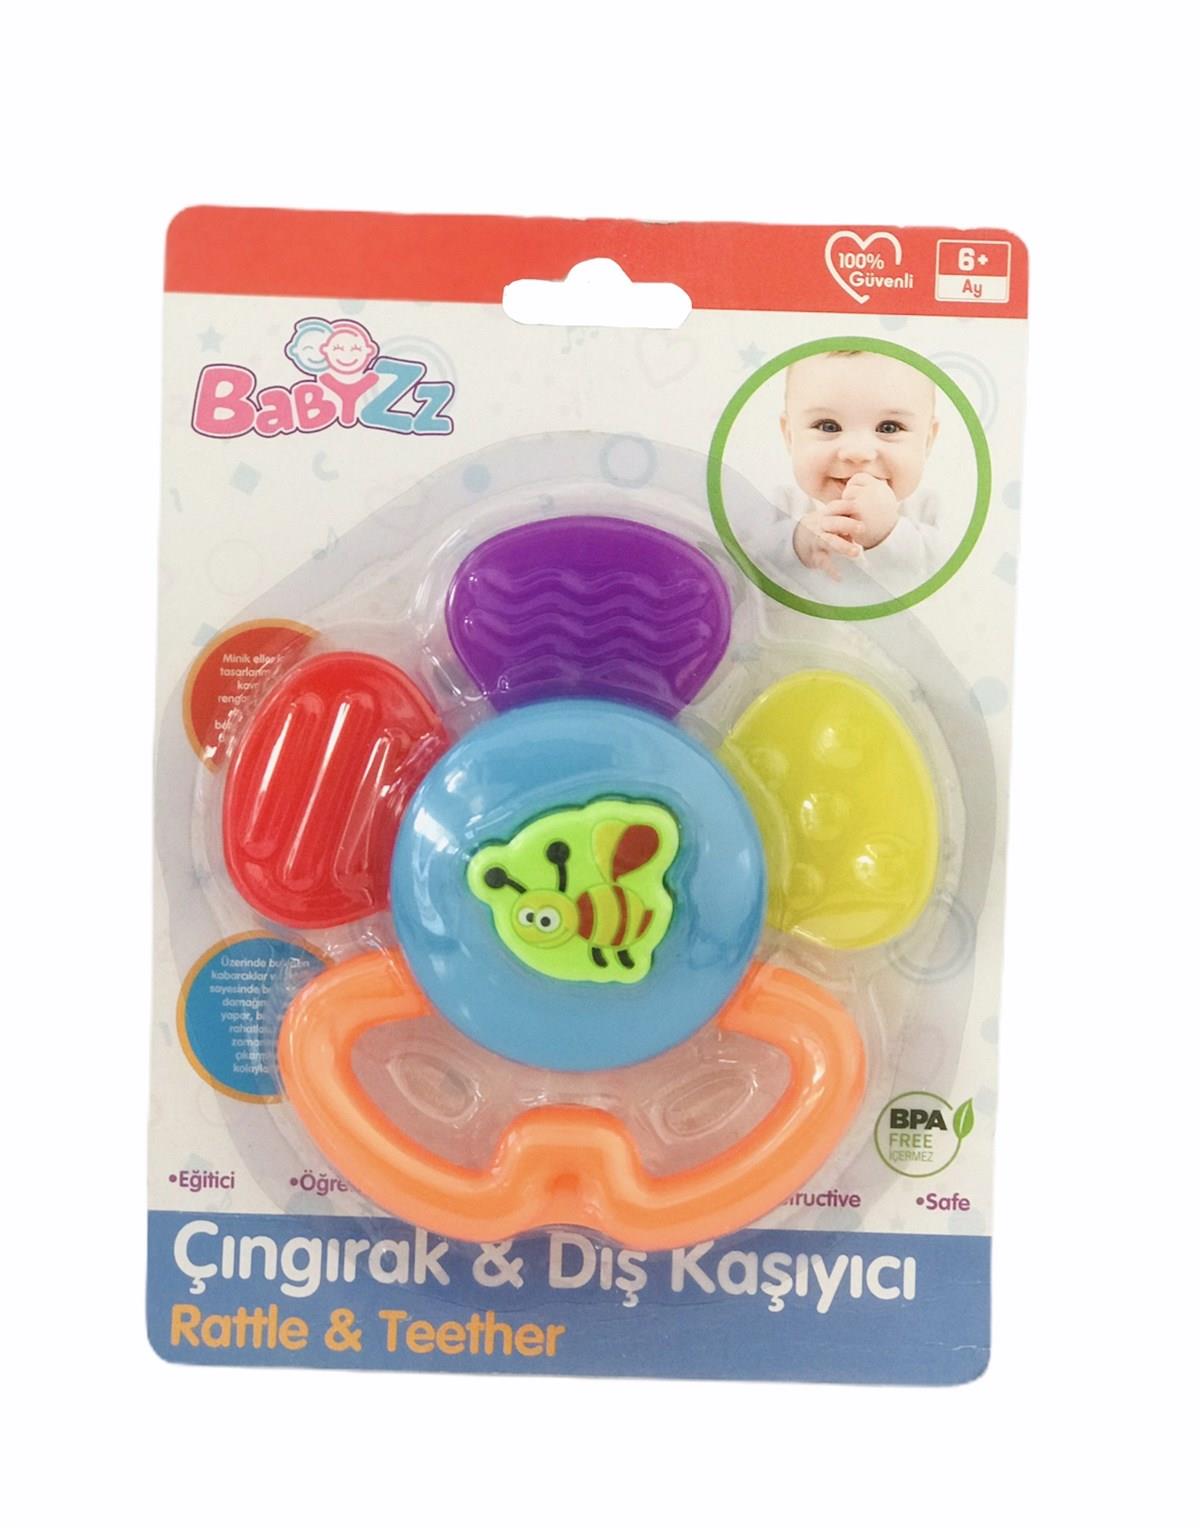 Kanz Oyuncak Babyzz Renkli Papatya Dişlik